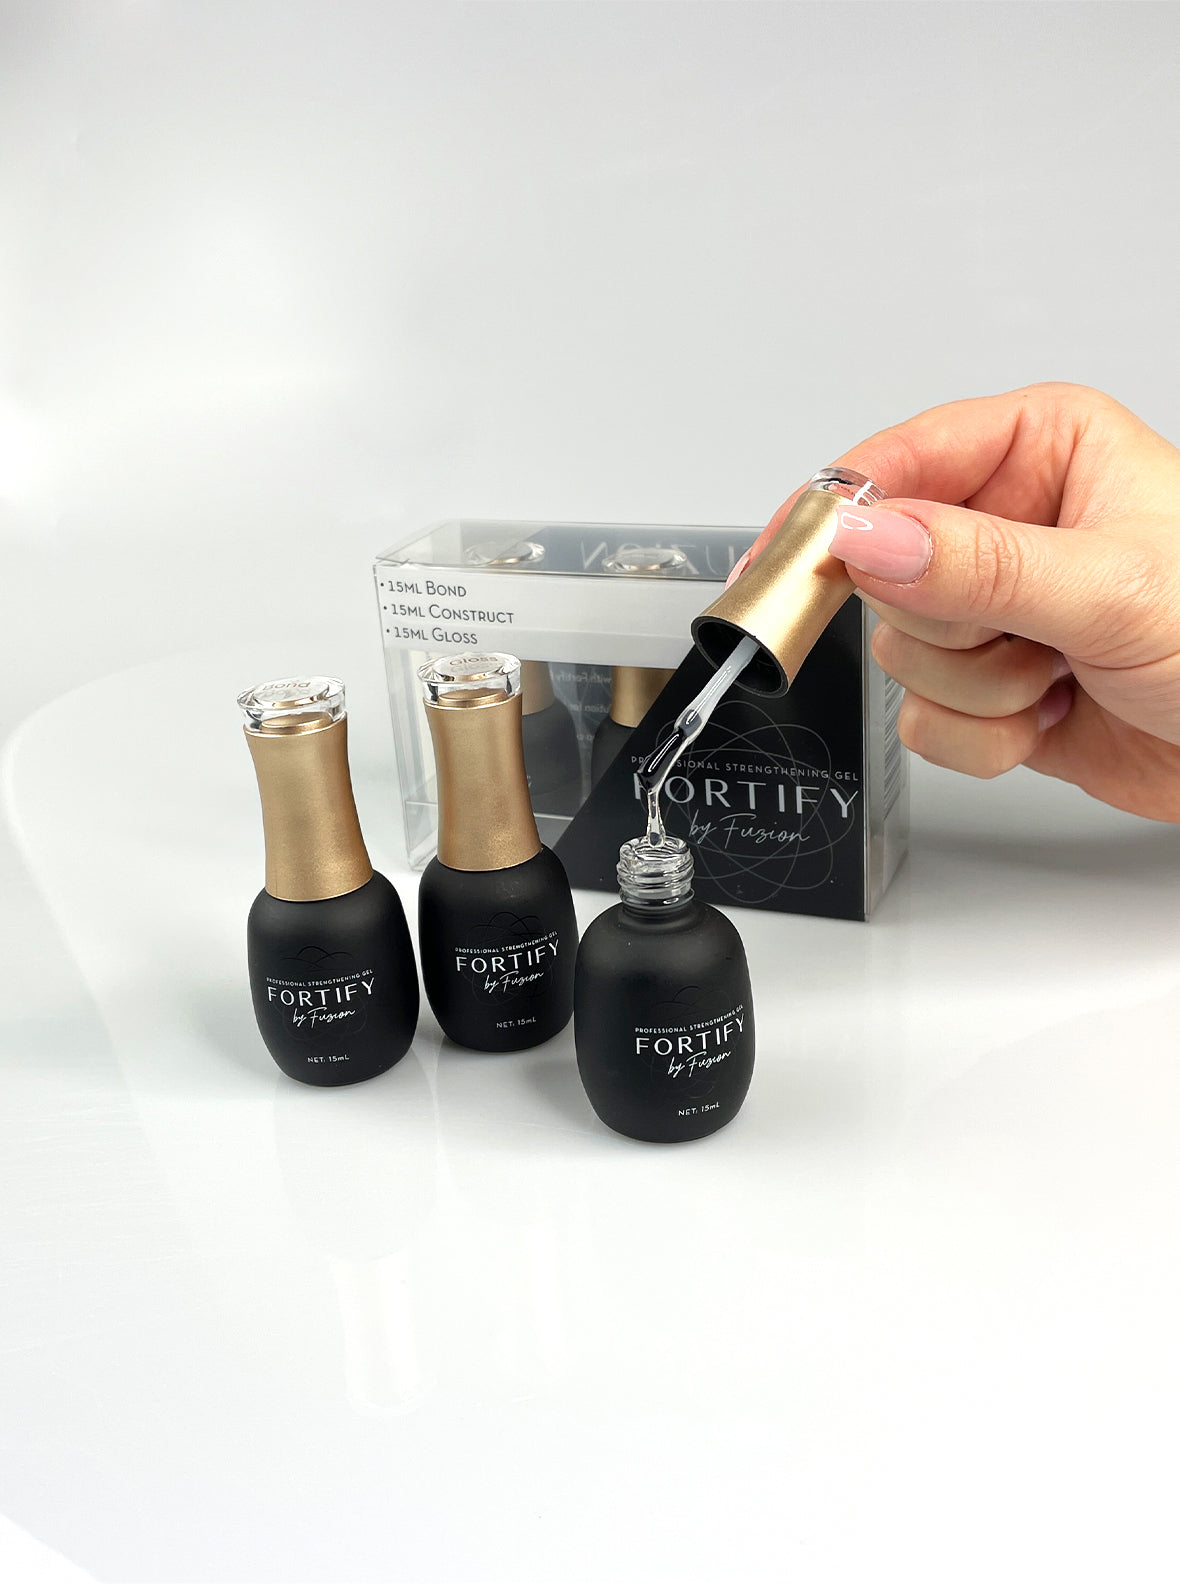 Fuzion Fortify Kit - Starter Set - Creata Beauty - Professional Beauty Products